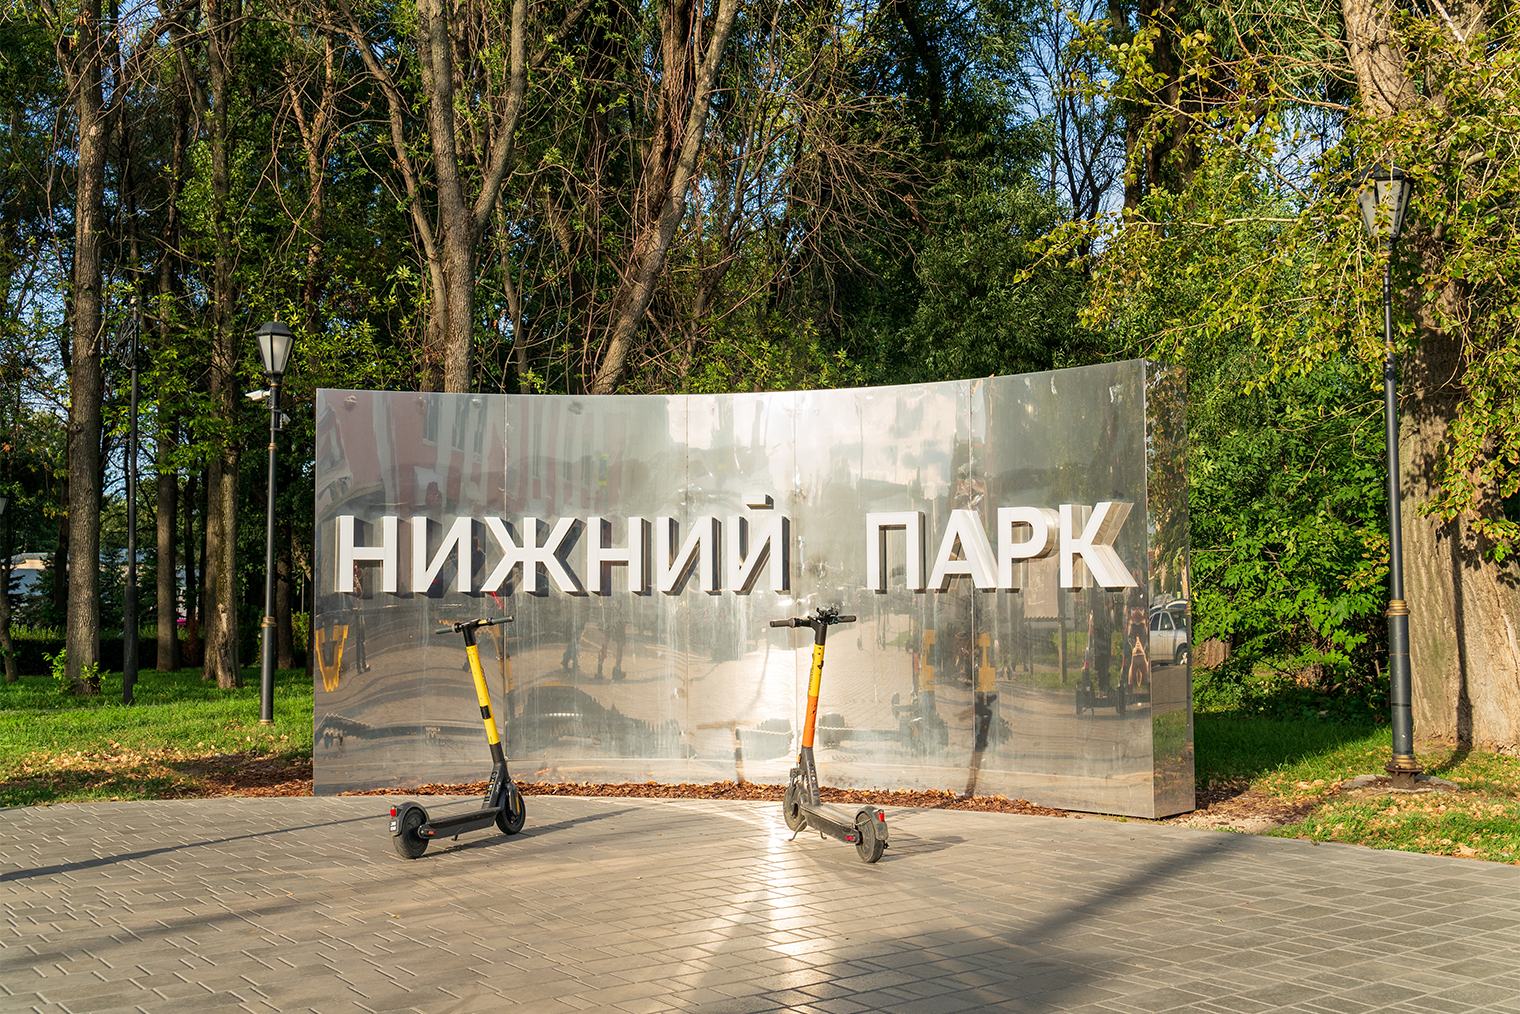 Нижний парк. Фотография: Maykova Galina / Shutterstock / FOTODOM